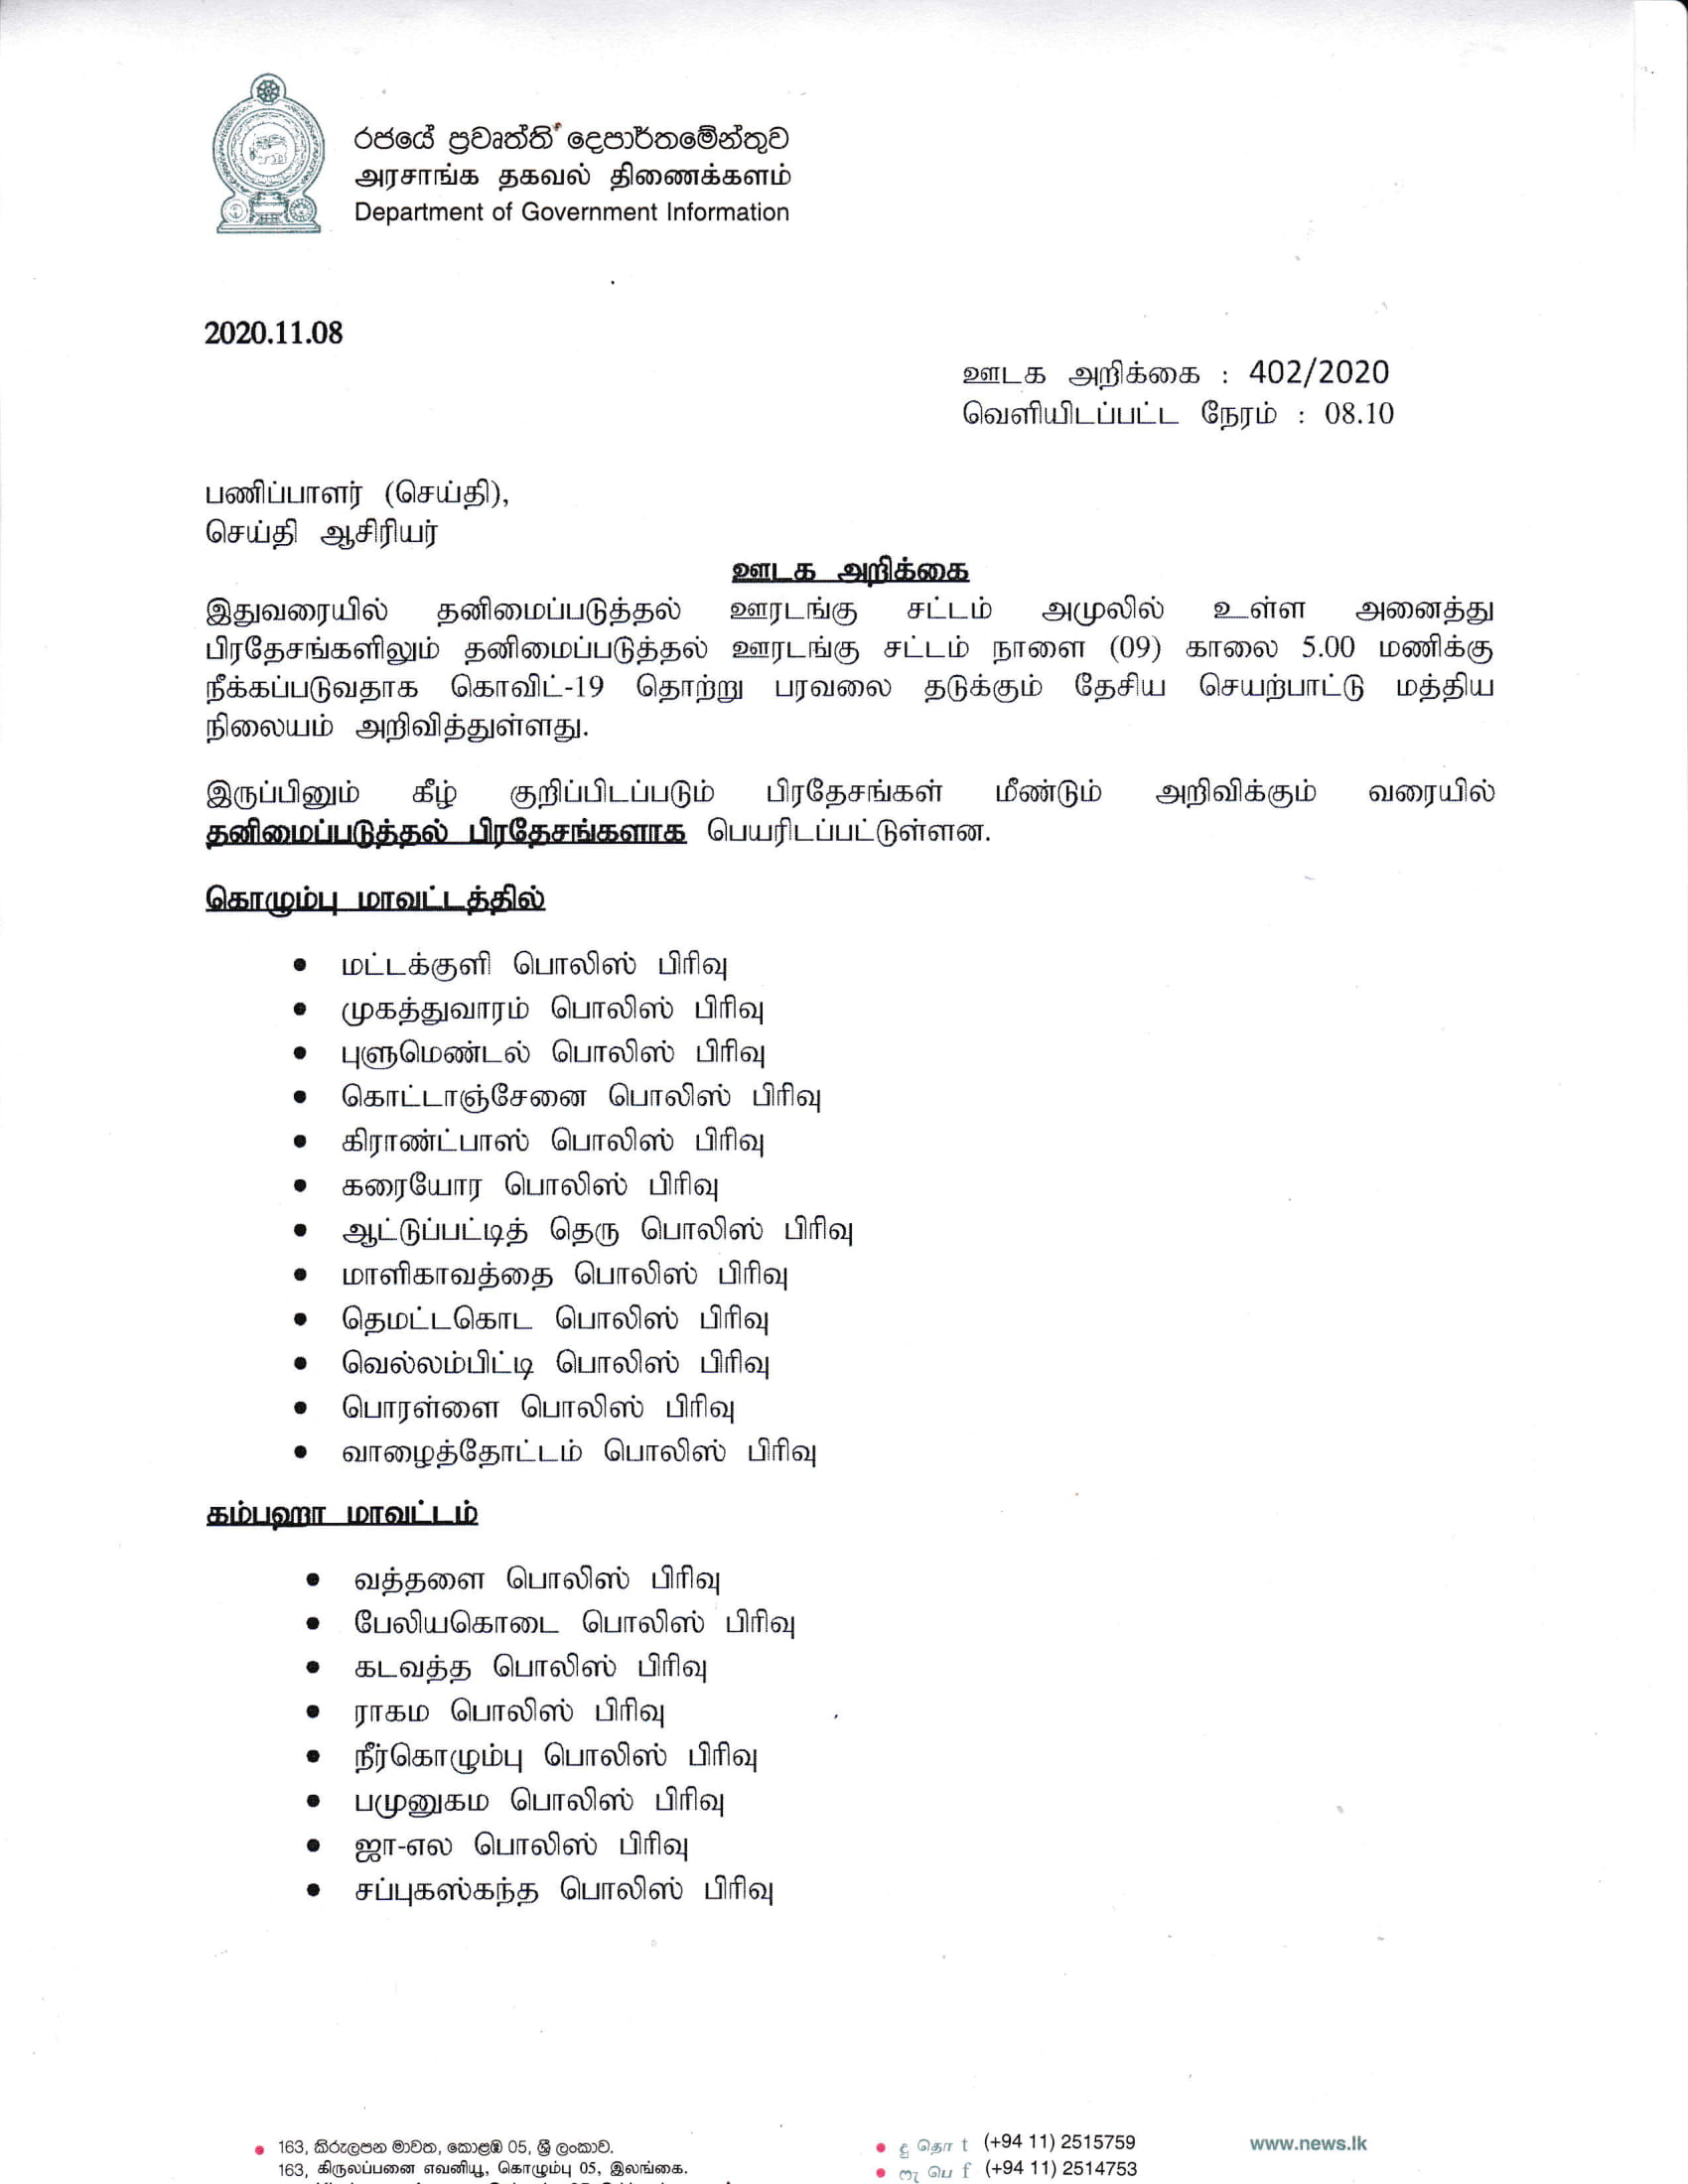 Press Release No 402 Tamil 1